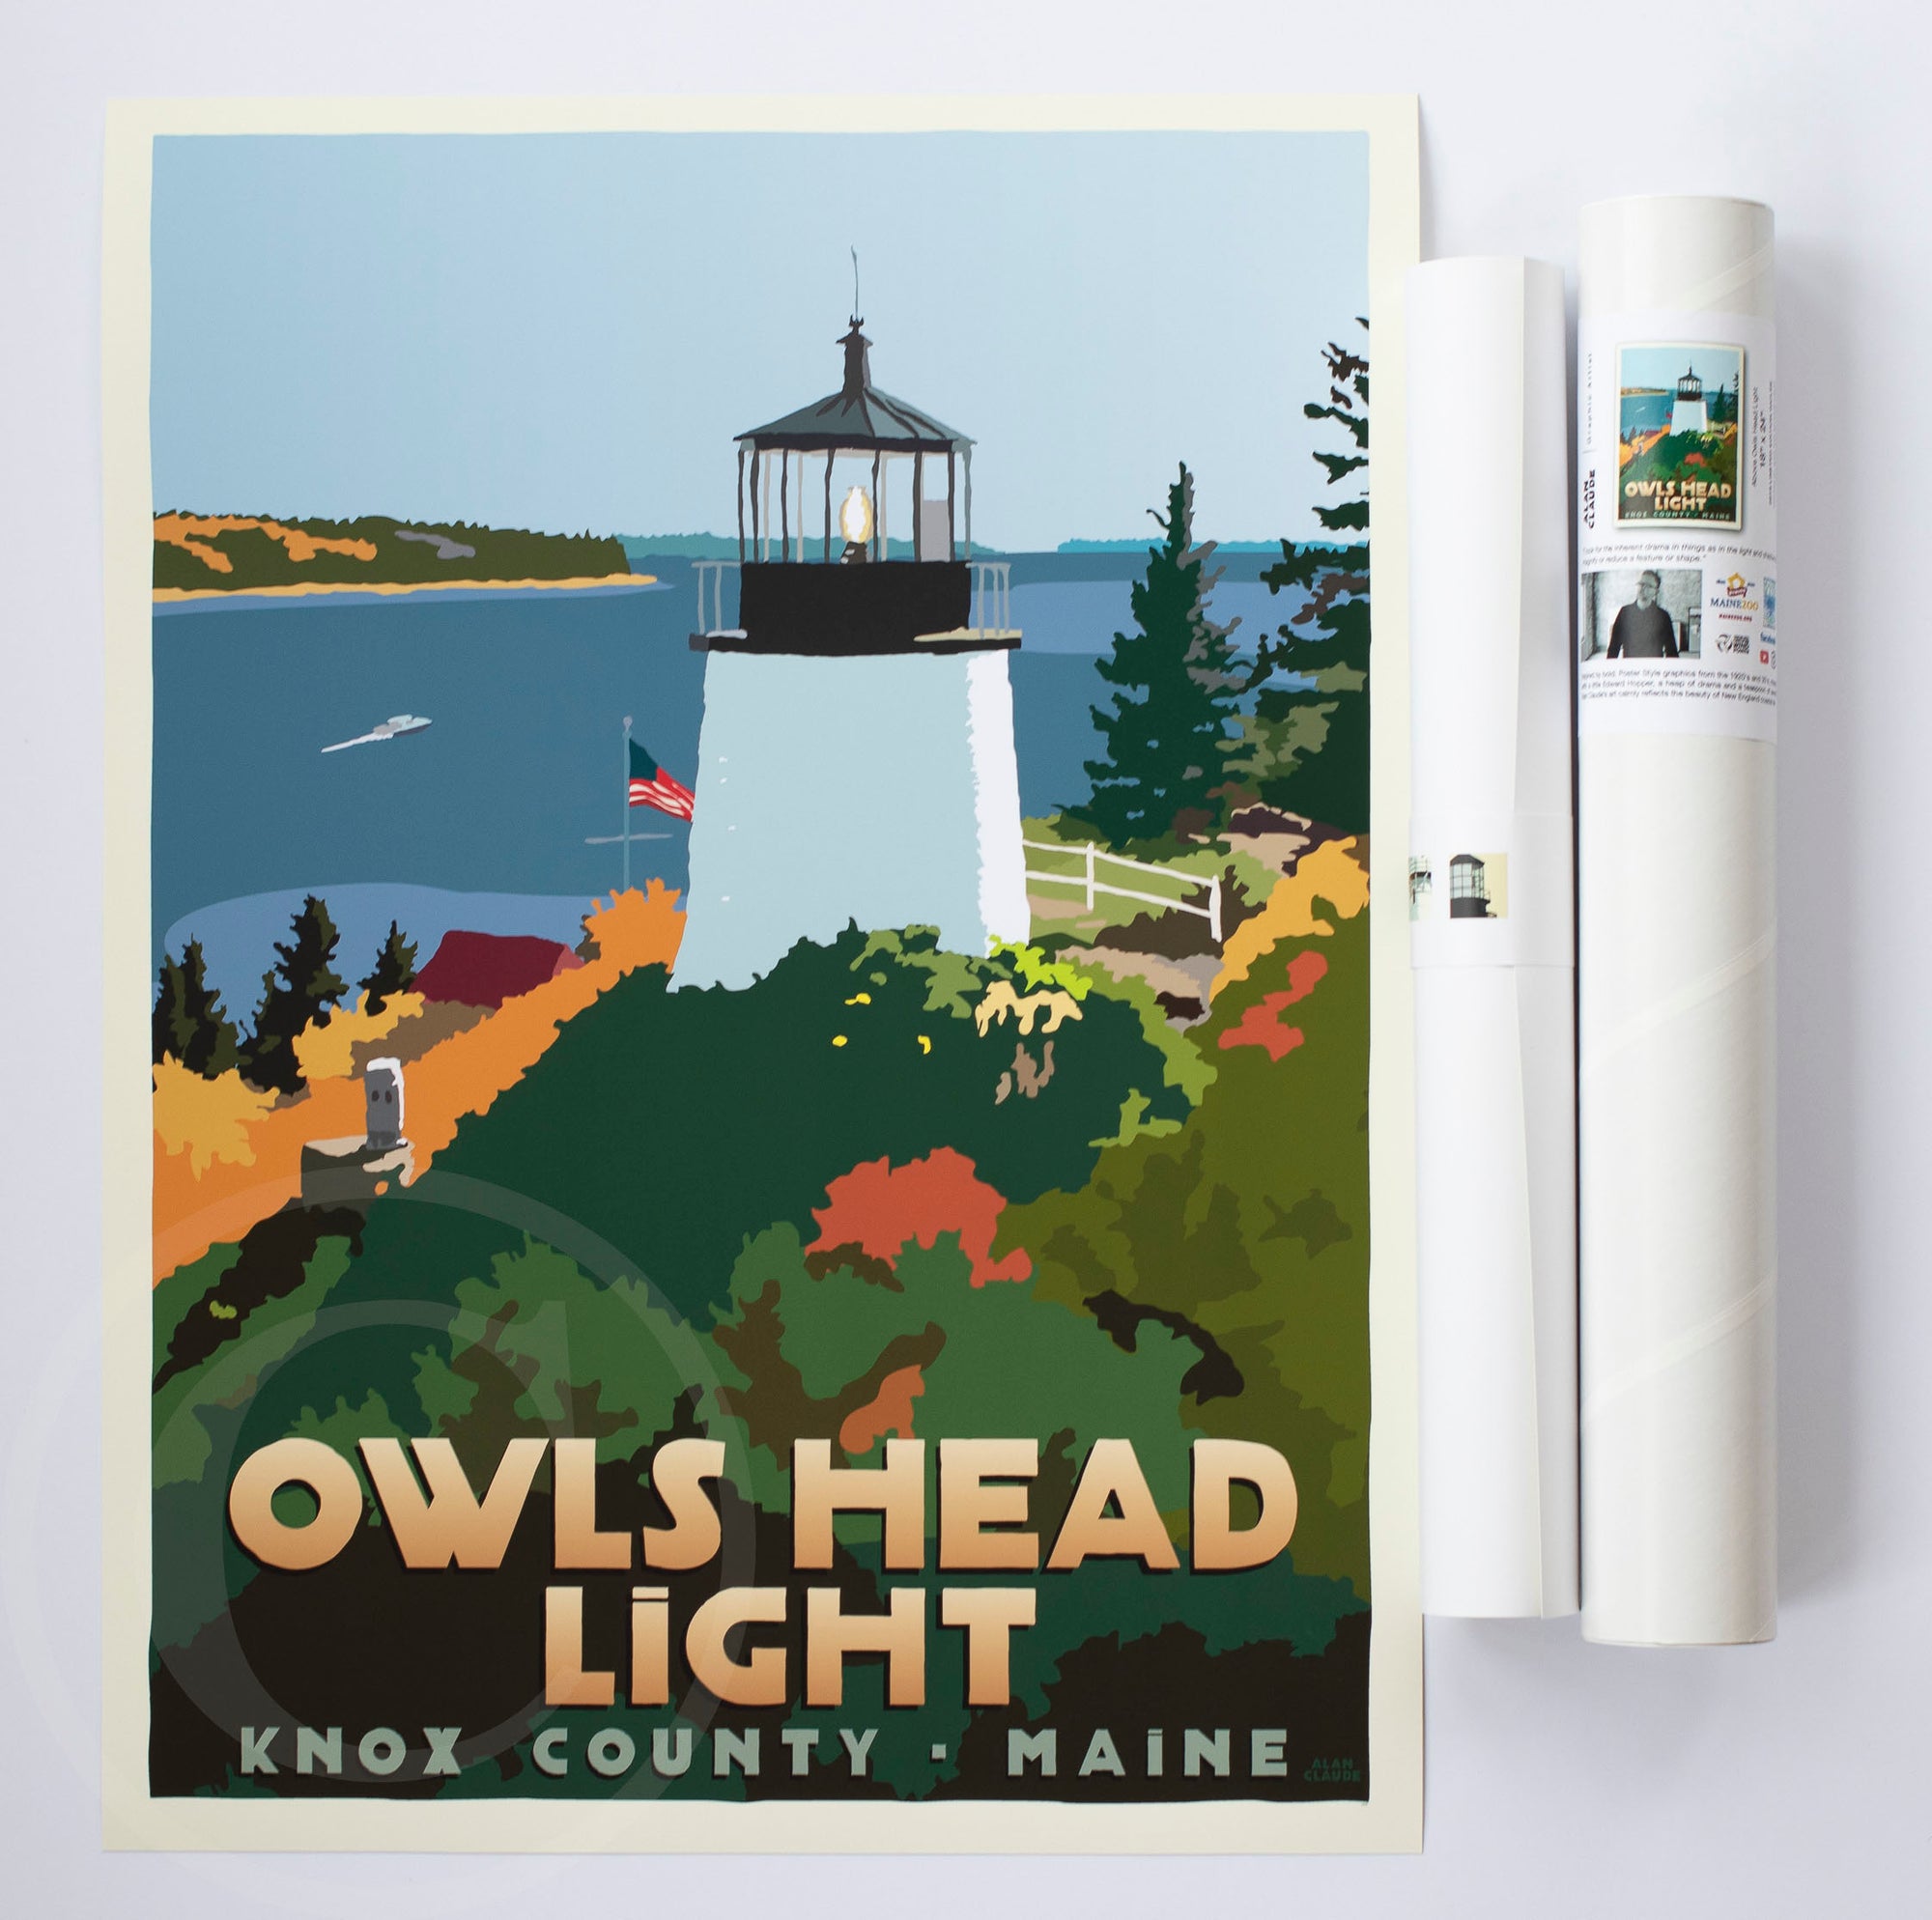 Above Owls Head Light Art Print 18" x 24" Travel Poster By Alan Claude - Maine